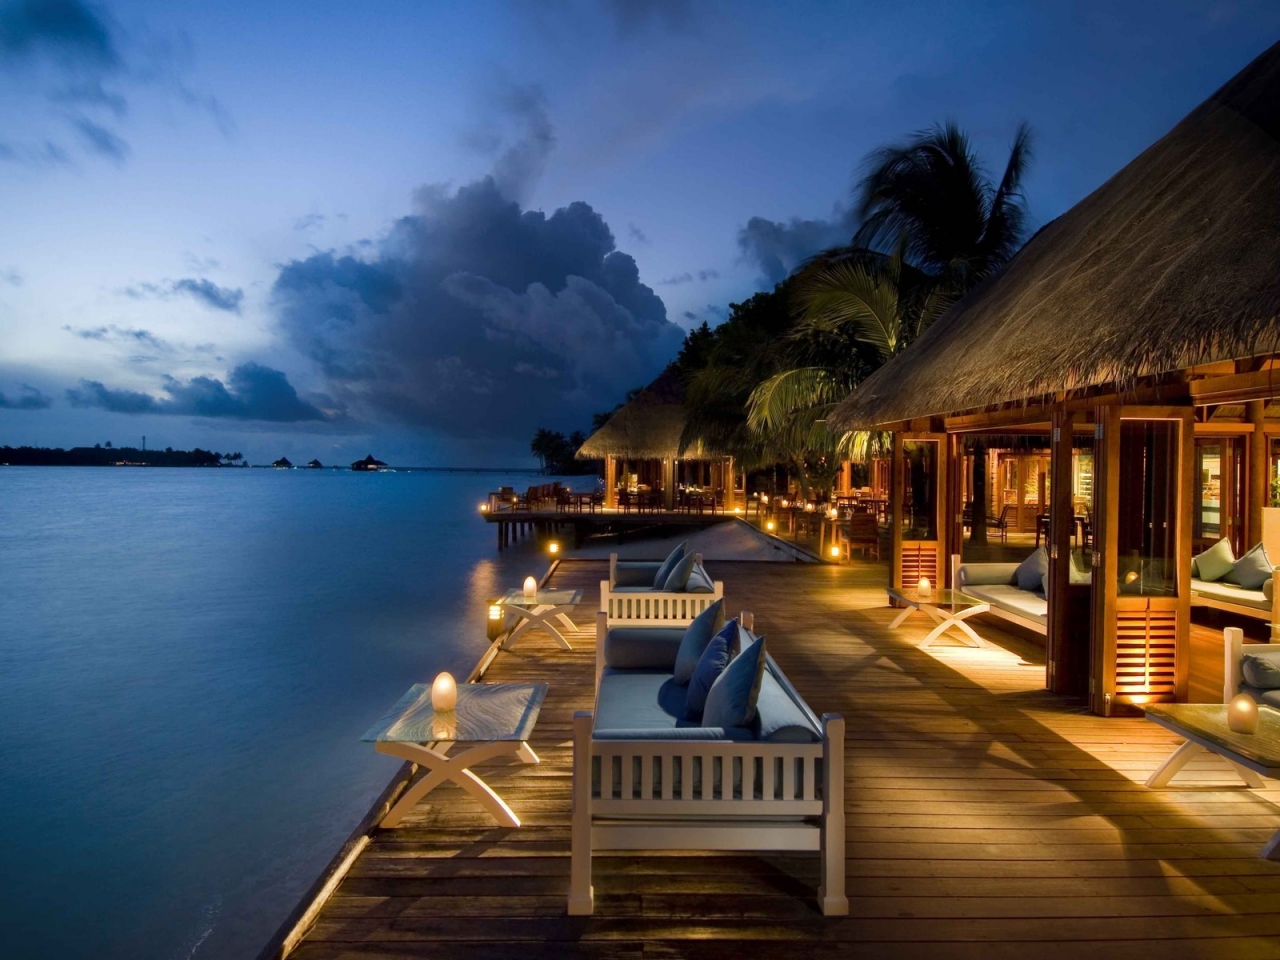 Sea Resort for 1280 x 960 resolution